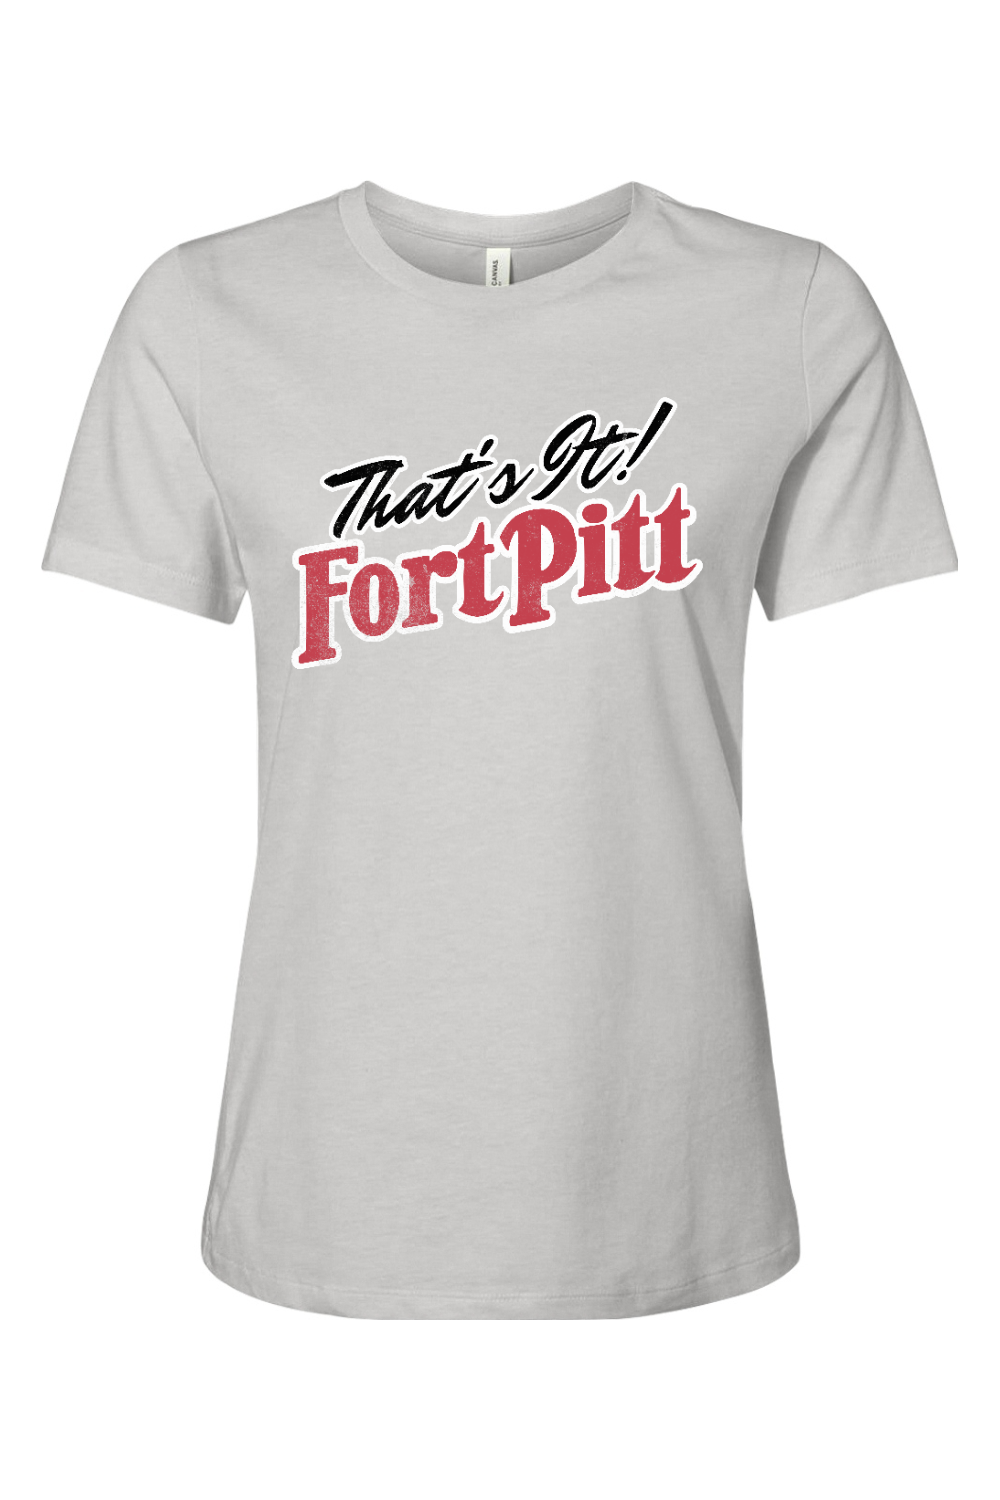 That's It! Fort Pitt Retro - Ladies Tee - Yinzylvania